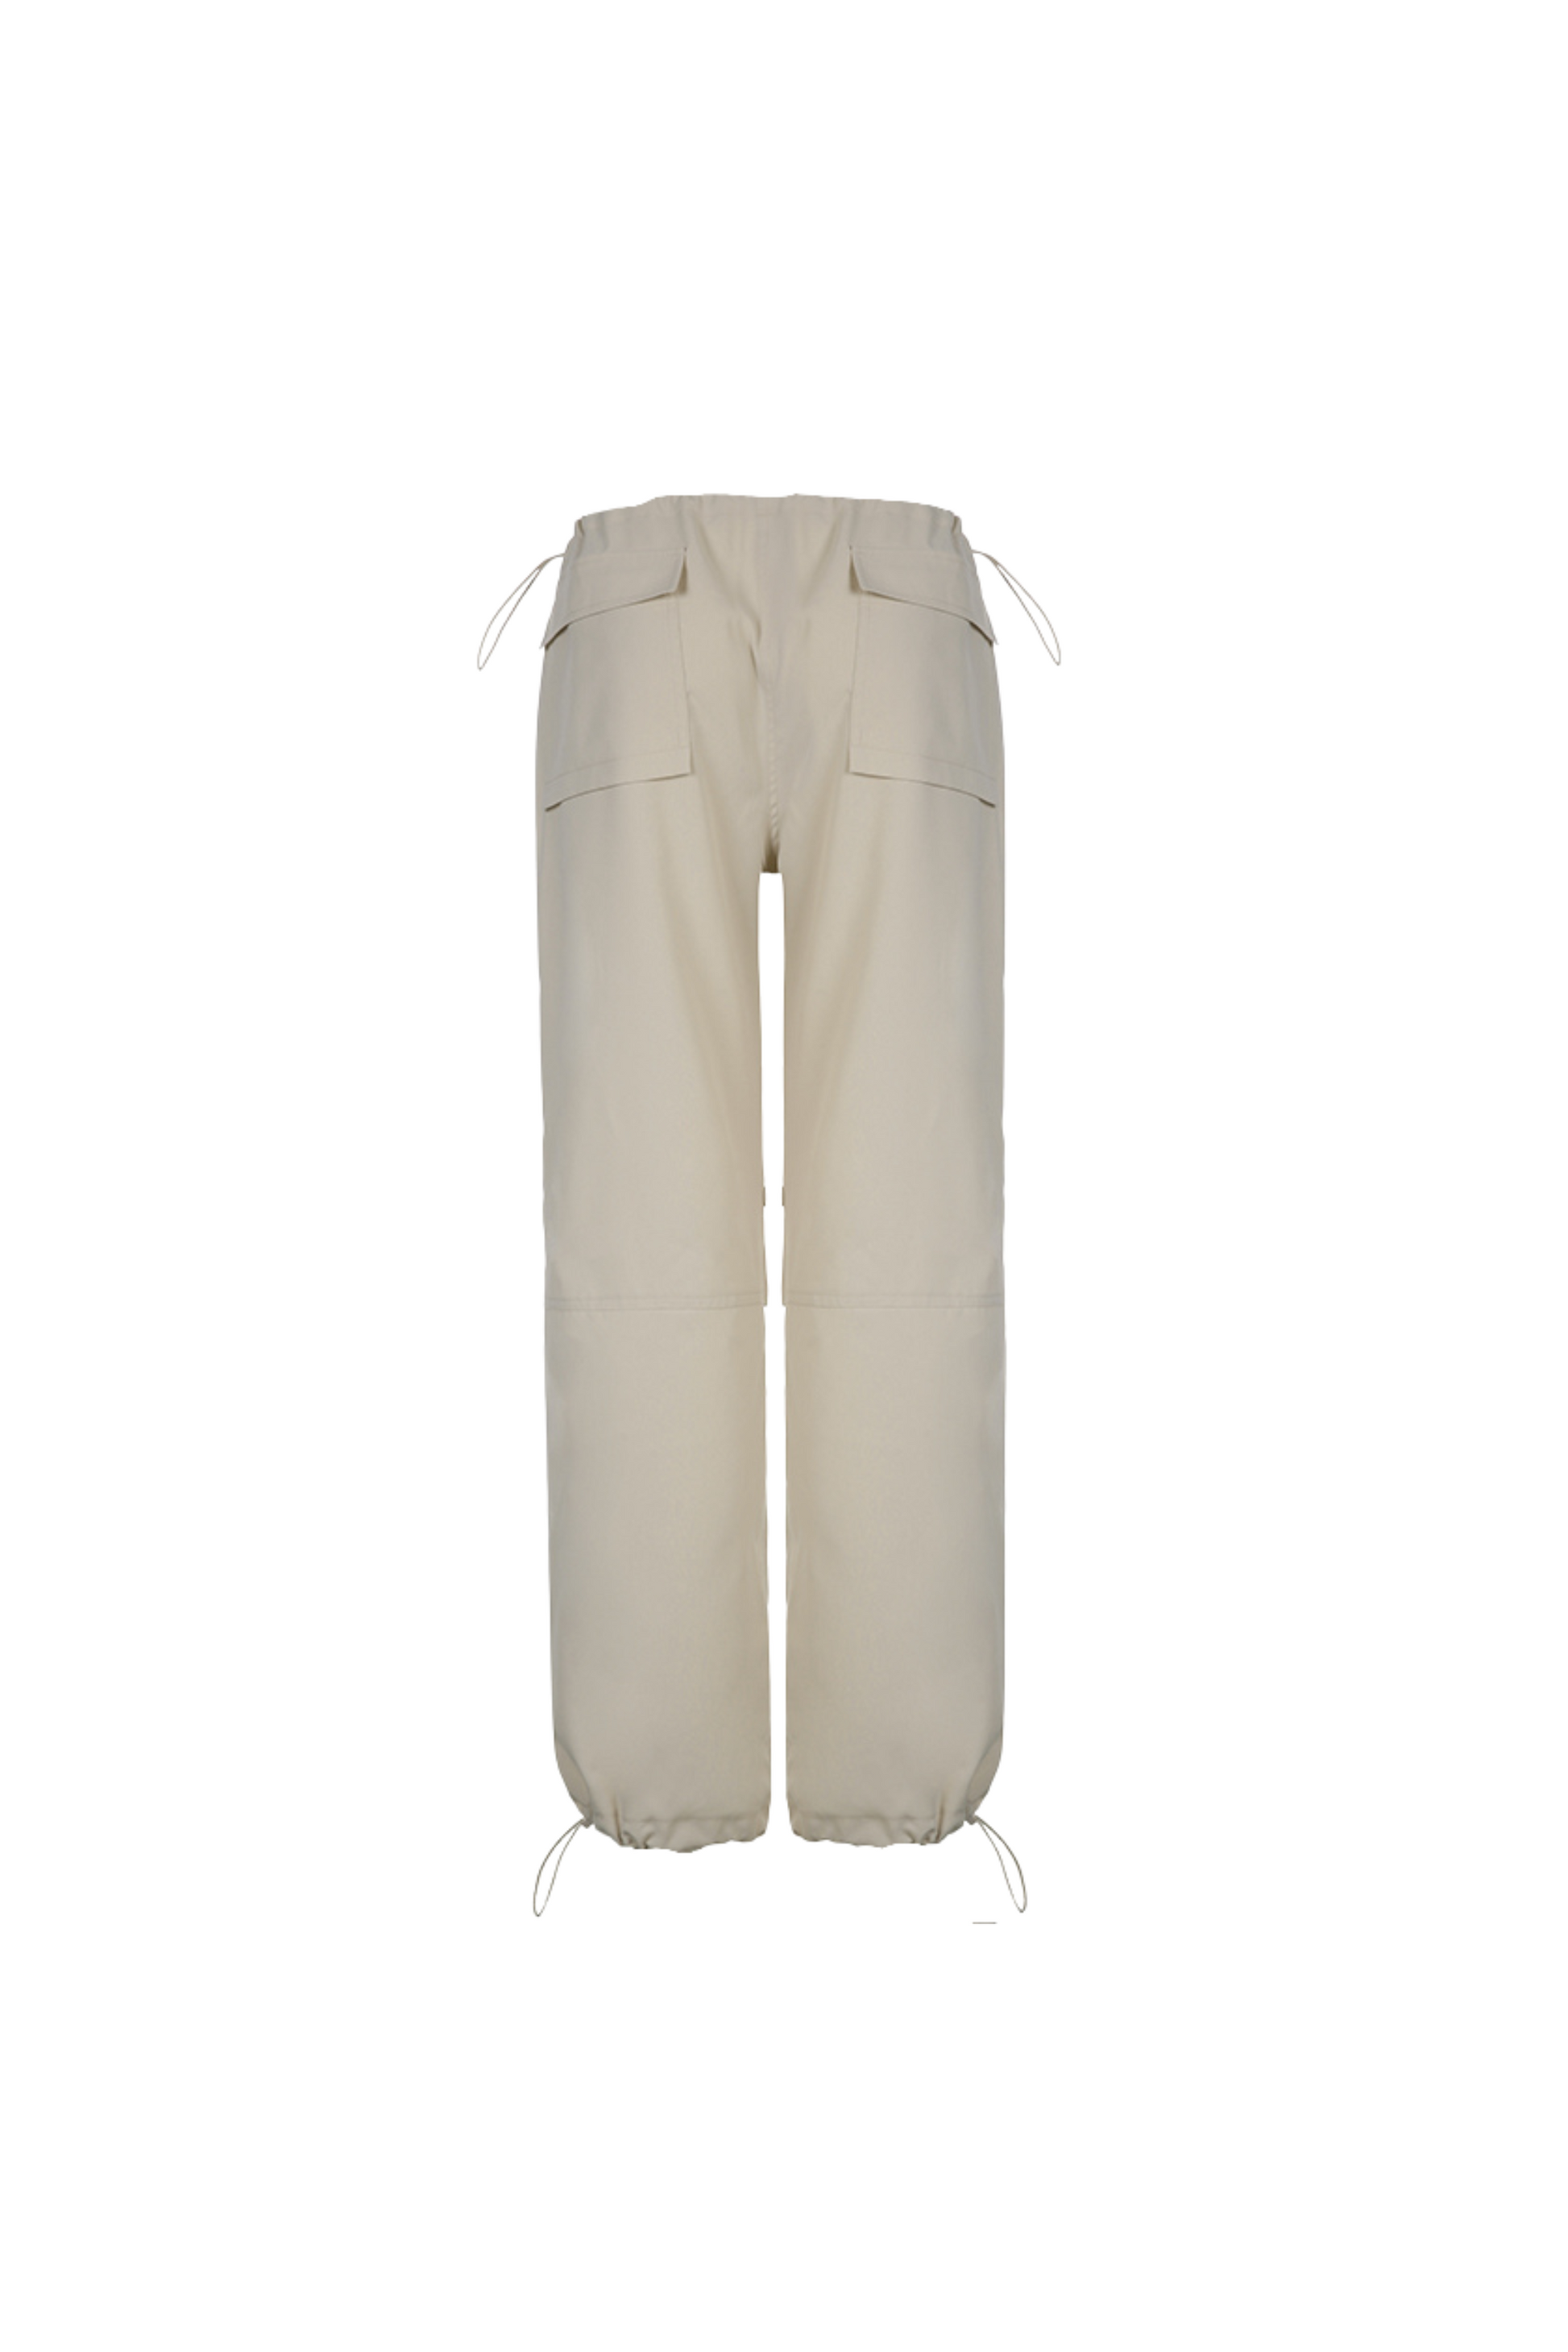 LaPose Fashion - Meryem Drawstring Baggy Pants - Baggy Pants, Clothing, Fall22, High Waist Pants, Loose Pants, Low Waist Pants, Oversize Pants, Pants